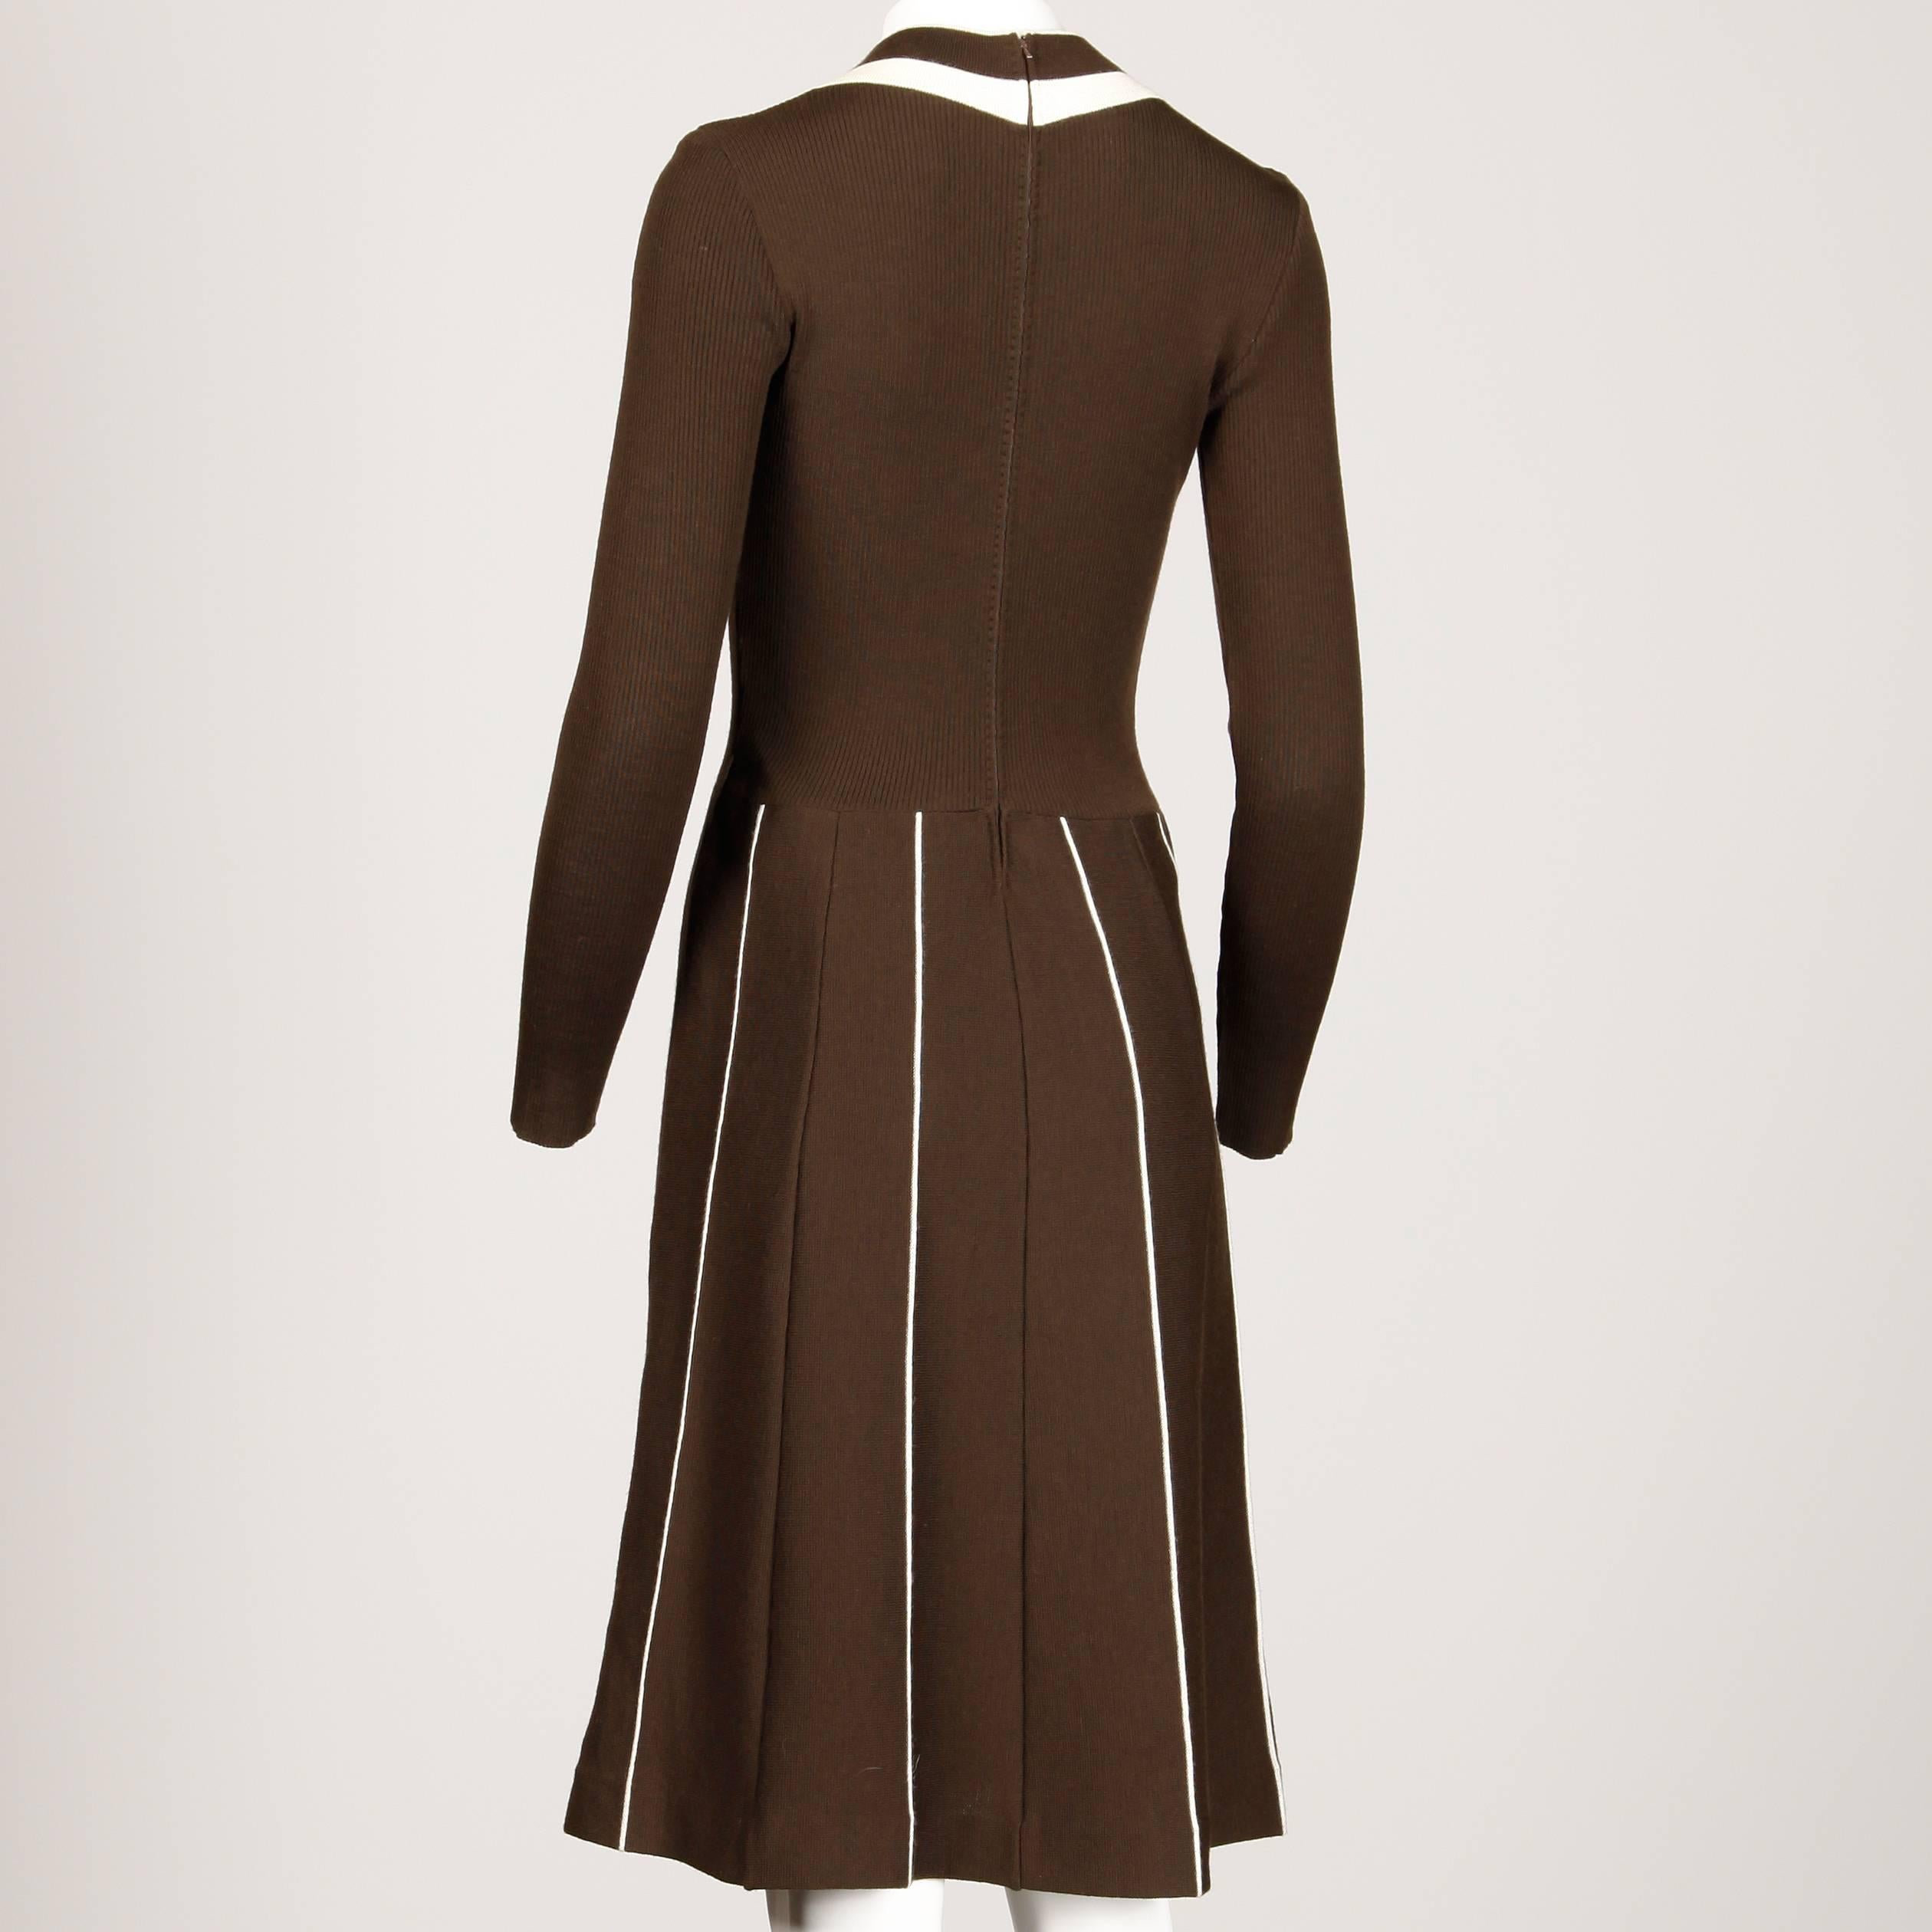 Black Unworn Crissa 1970s Vintage 100% Wool Brown Knit Dress with Original Tags